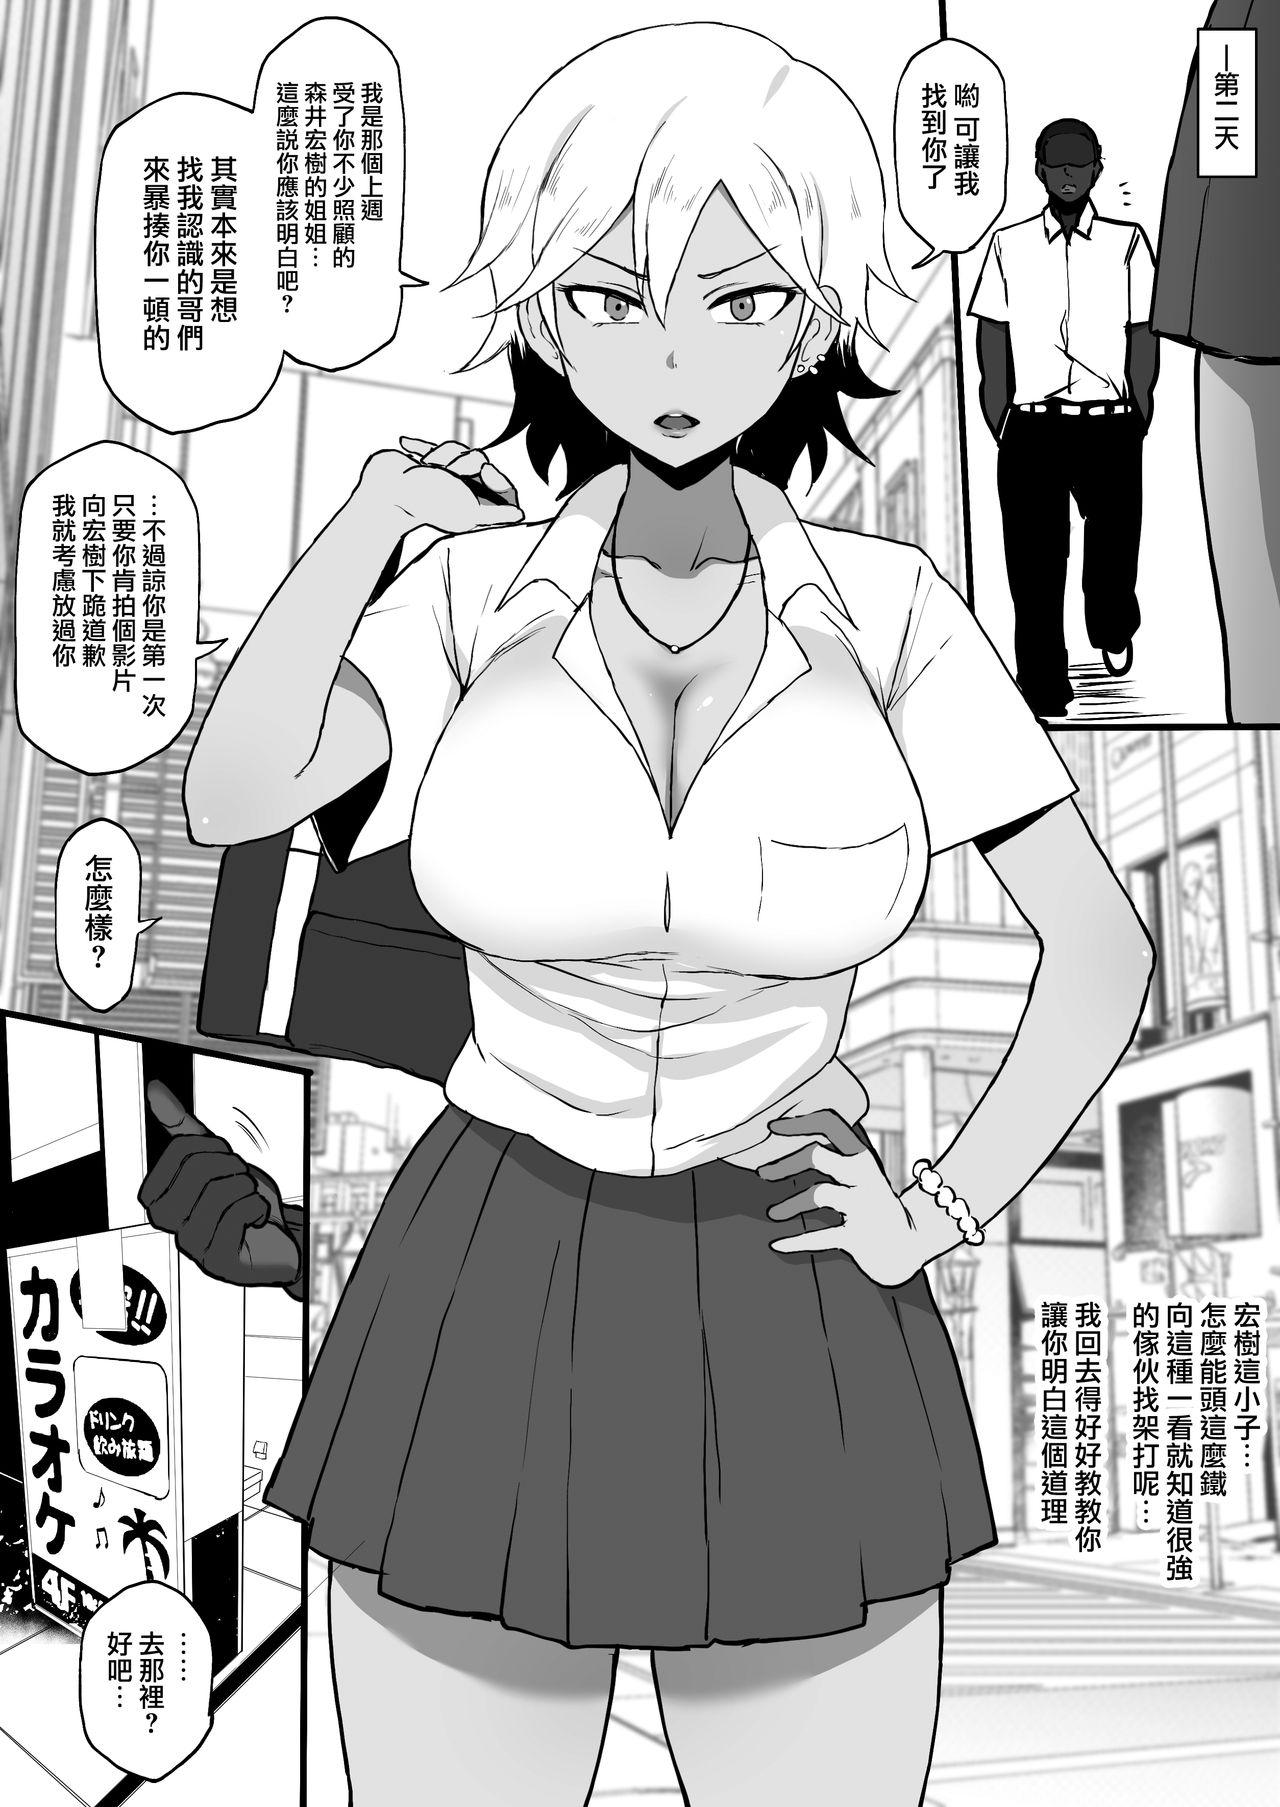 Kokujin no Tenkousei NTR ru Chapters 1-6 part 1 Plus Bonus chapter: Stolen Mother’s Breasts 5